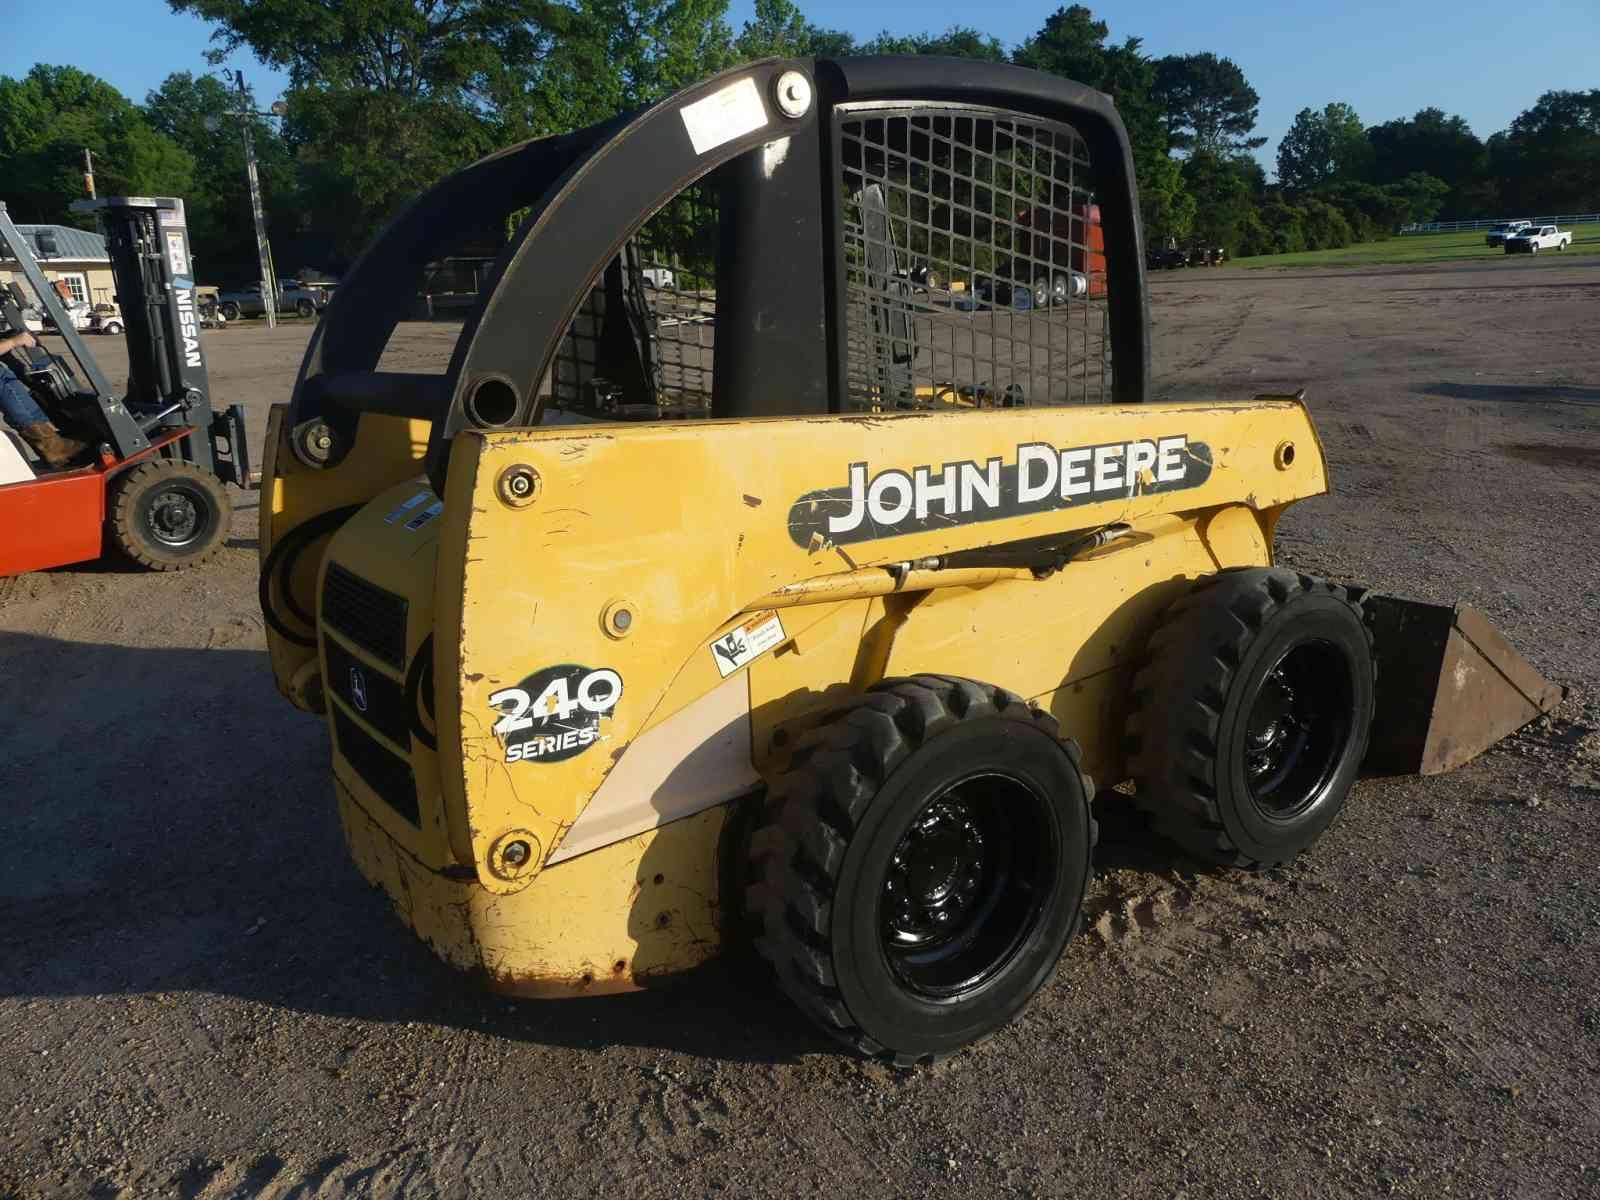 John Deere 240 Skid Steer, s/n T00240A931618: Canopy, GP Bkt., Rubber-tired